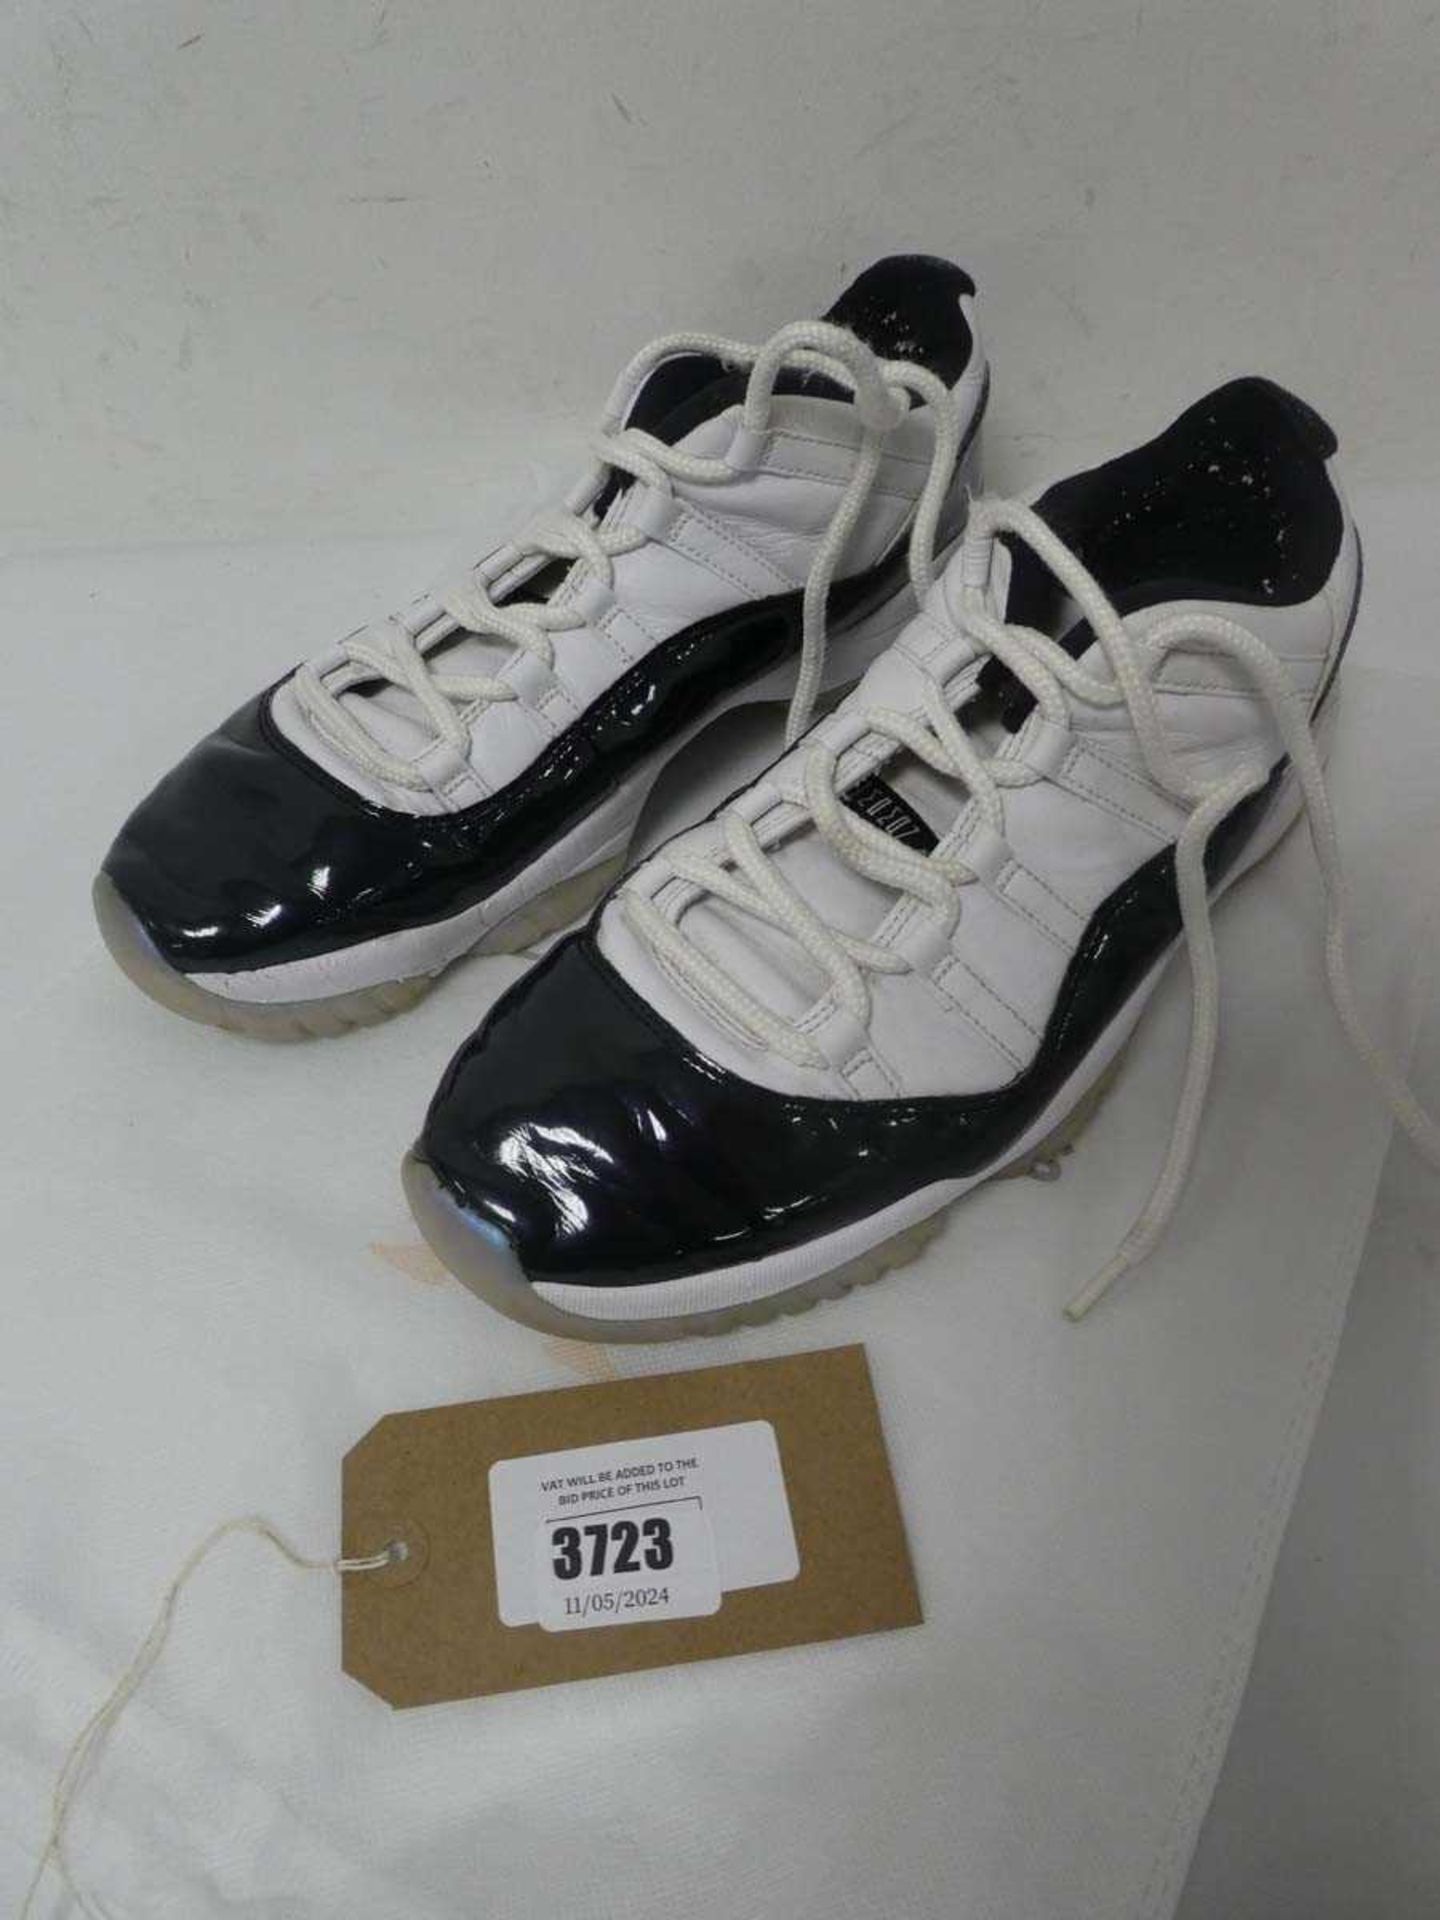 +VAT 1 x Nike Jordans, white and black, signs of wear, UK 11